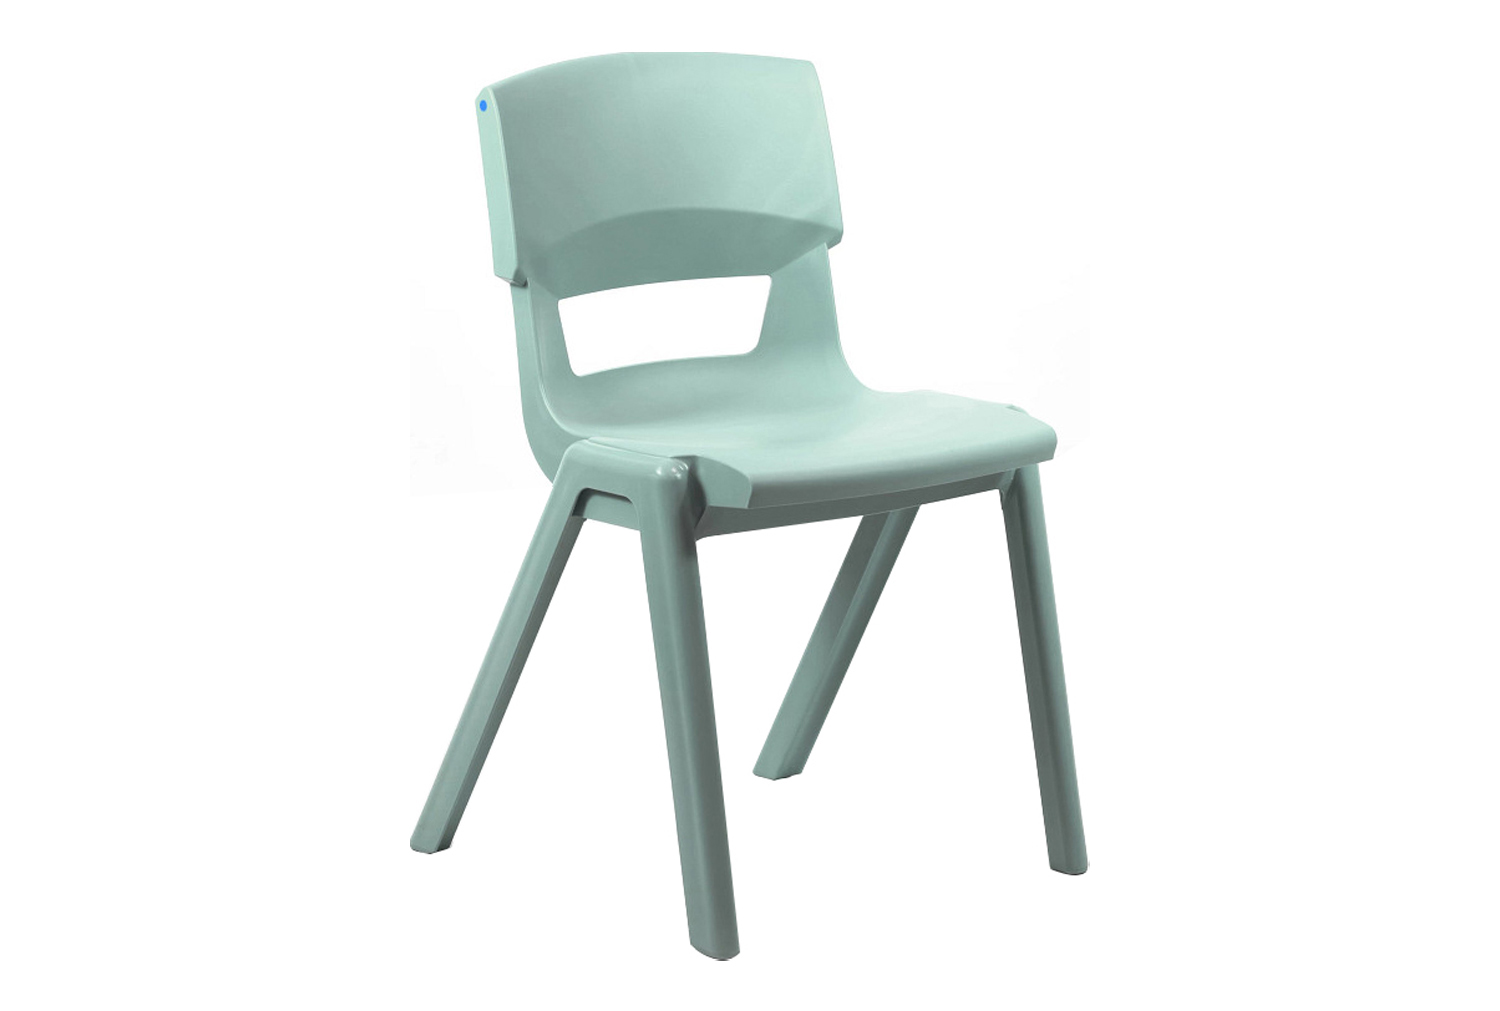 Qty 10 - Postura+ Classroom Chair, 14+ Years - 38wx37dx46h (cm), Hazy Jade